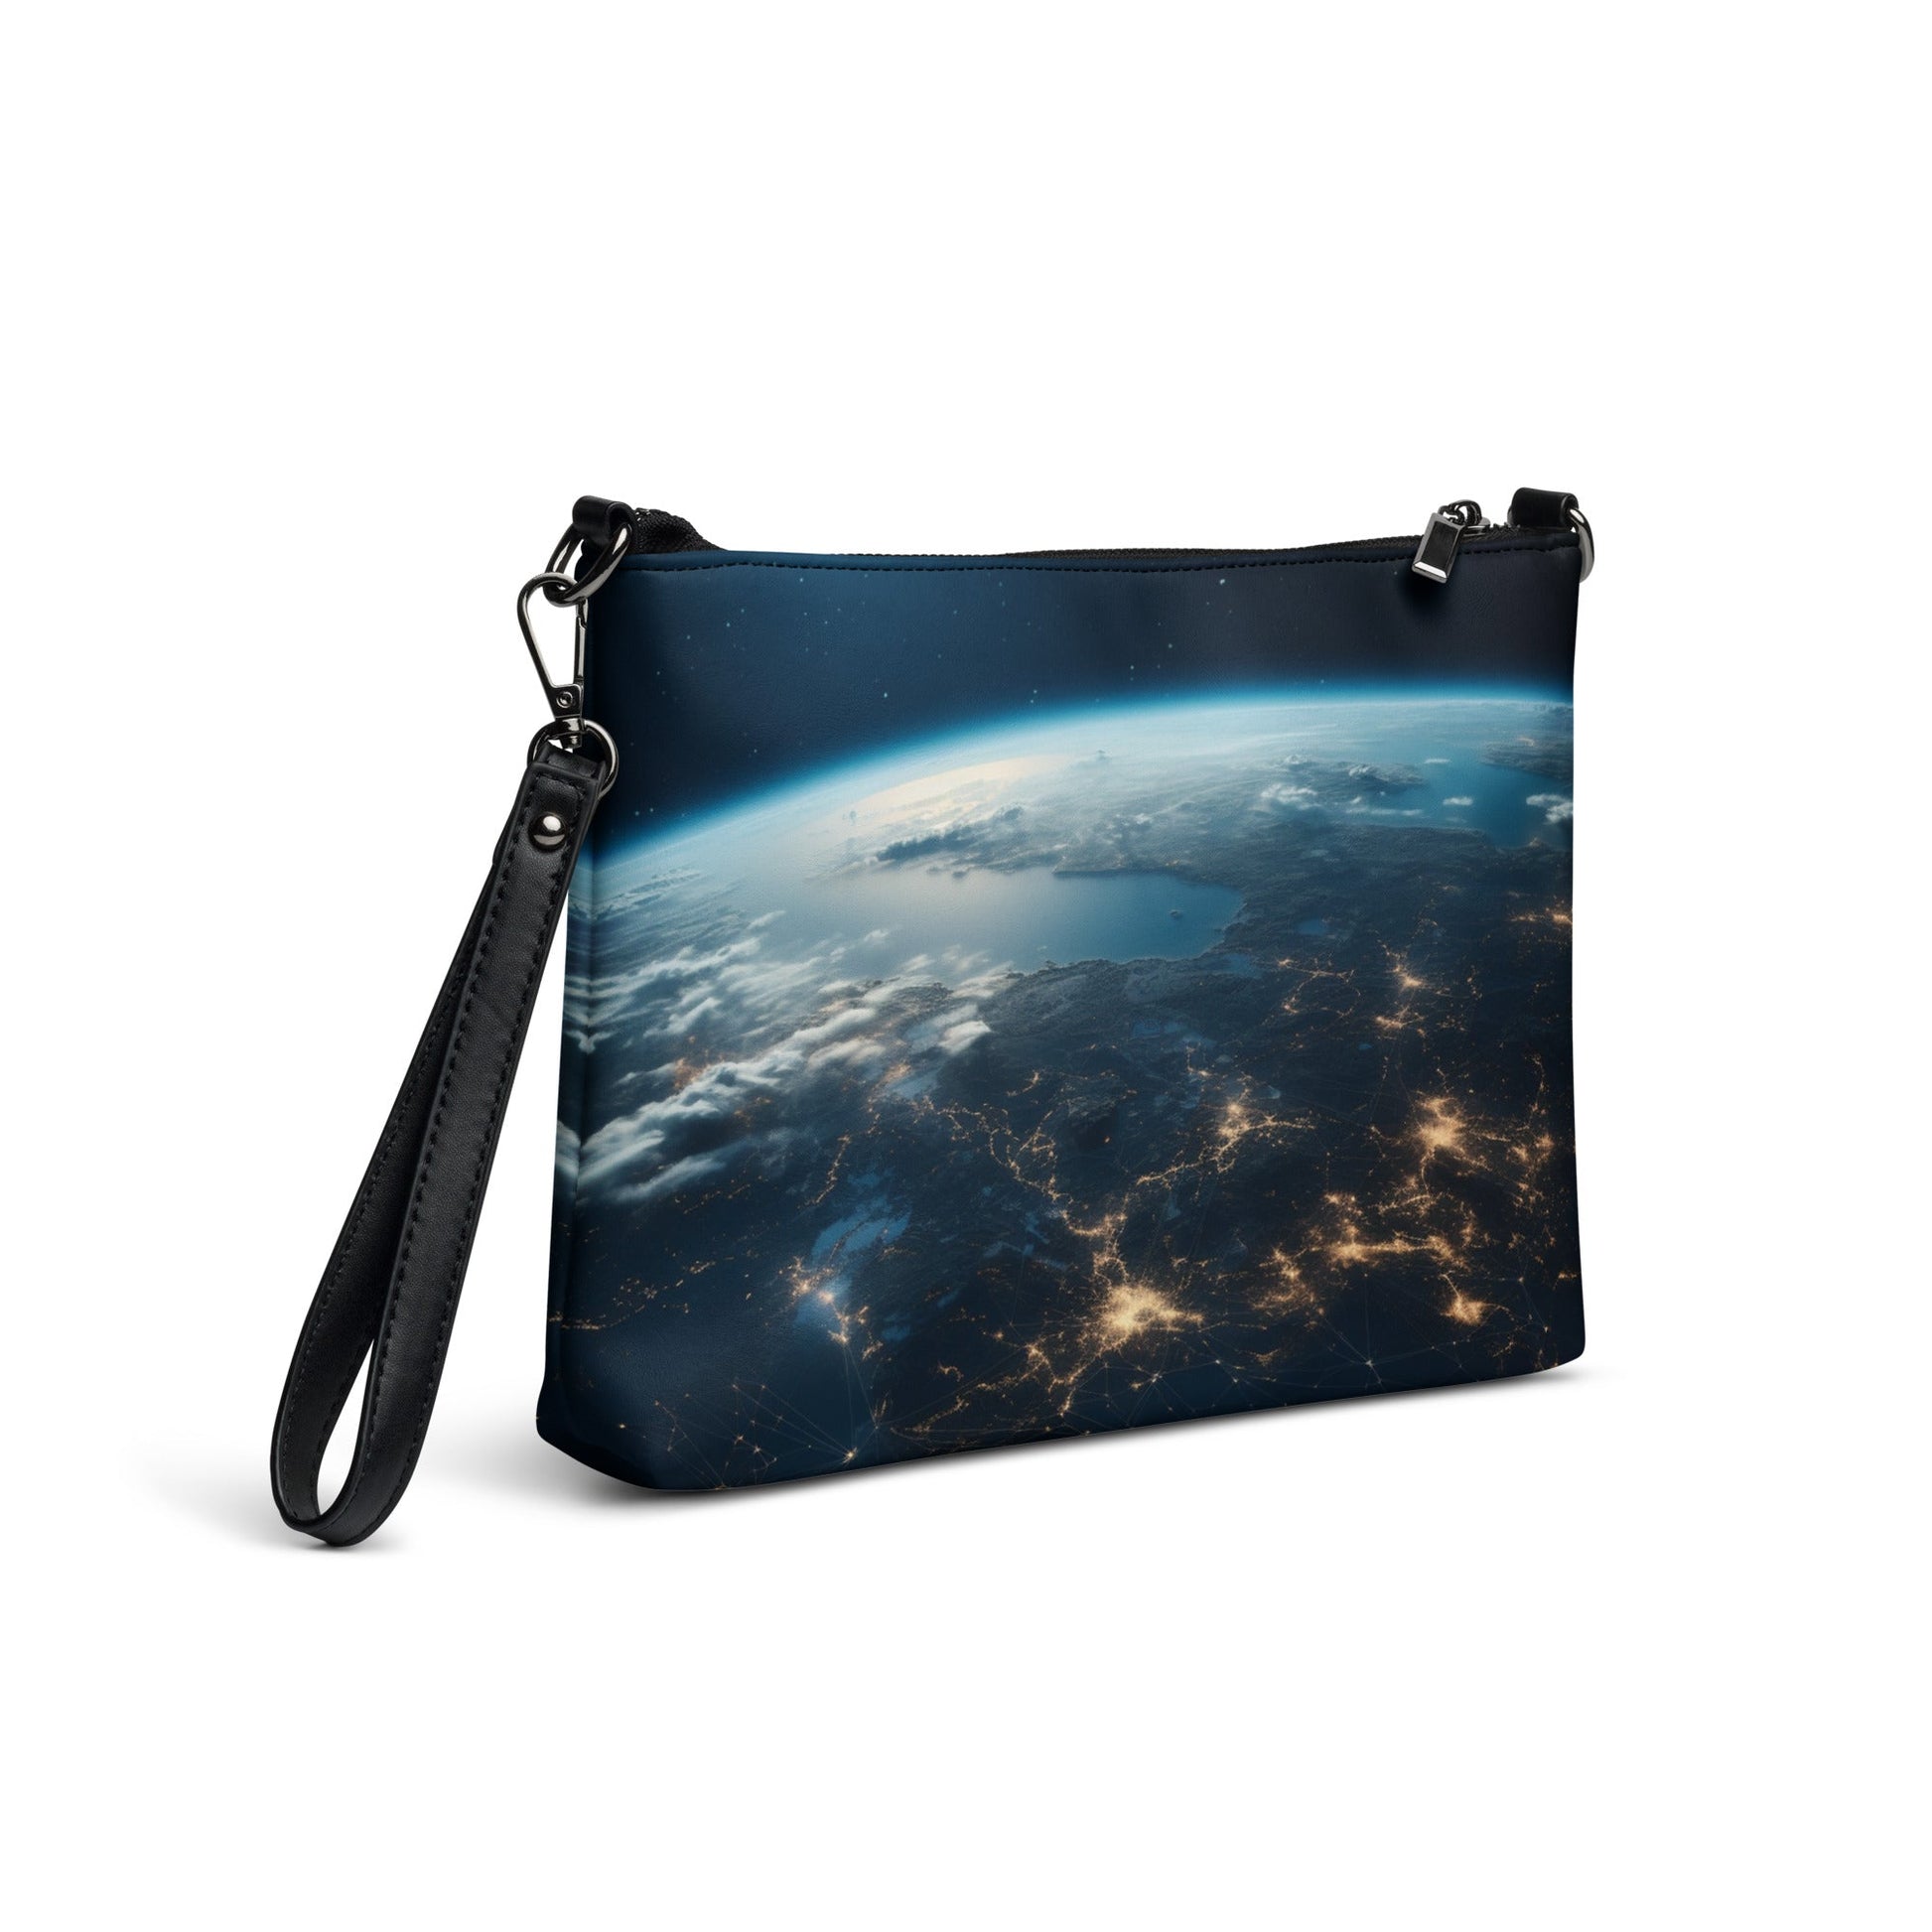 6 BILJON Global Crossbody bag by Neduz Designs